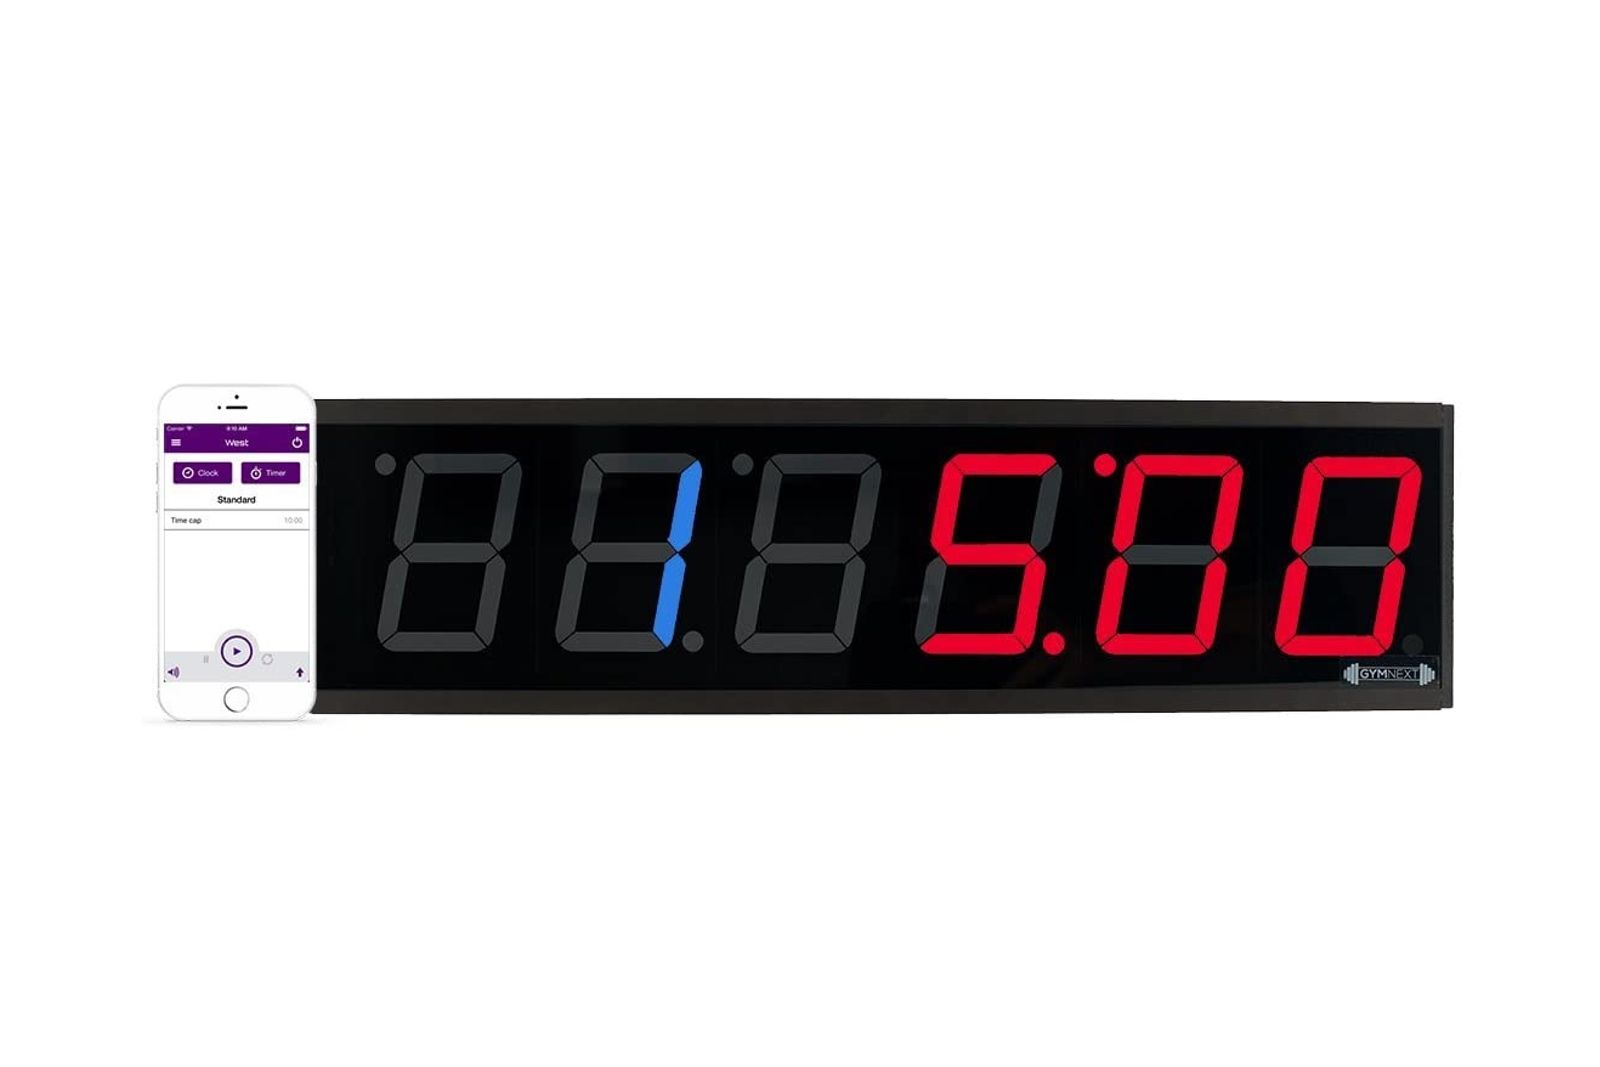 Cronómetro / Reloj Temporizador digital portátil Gimnasio